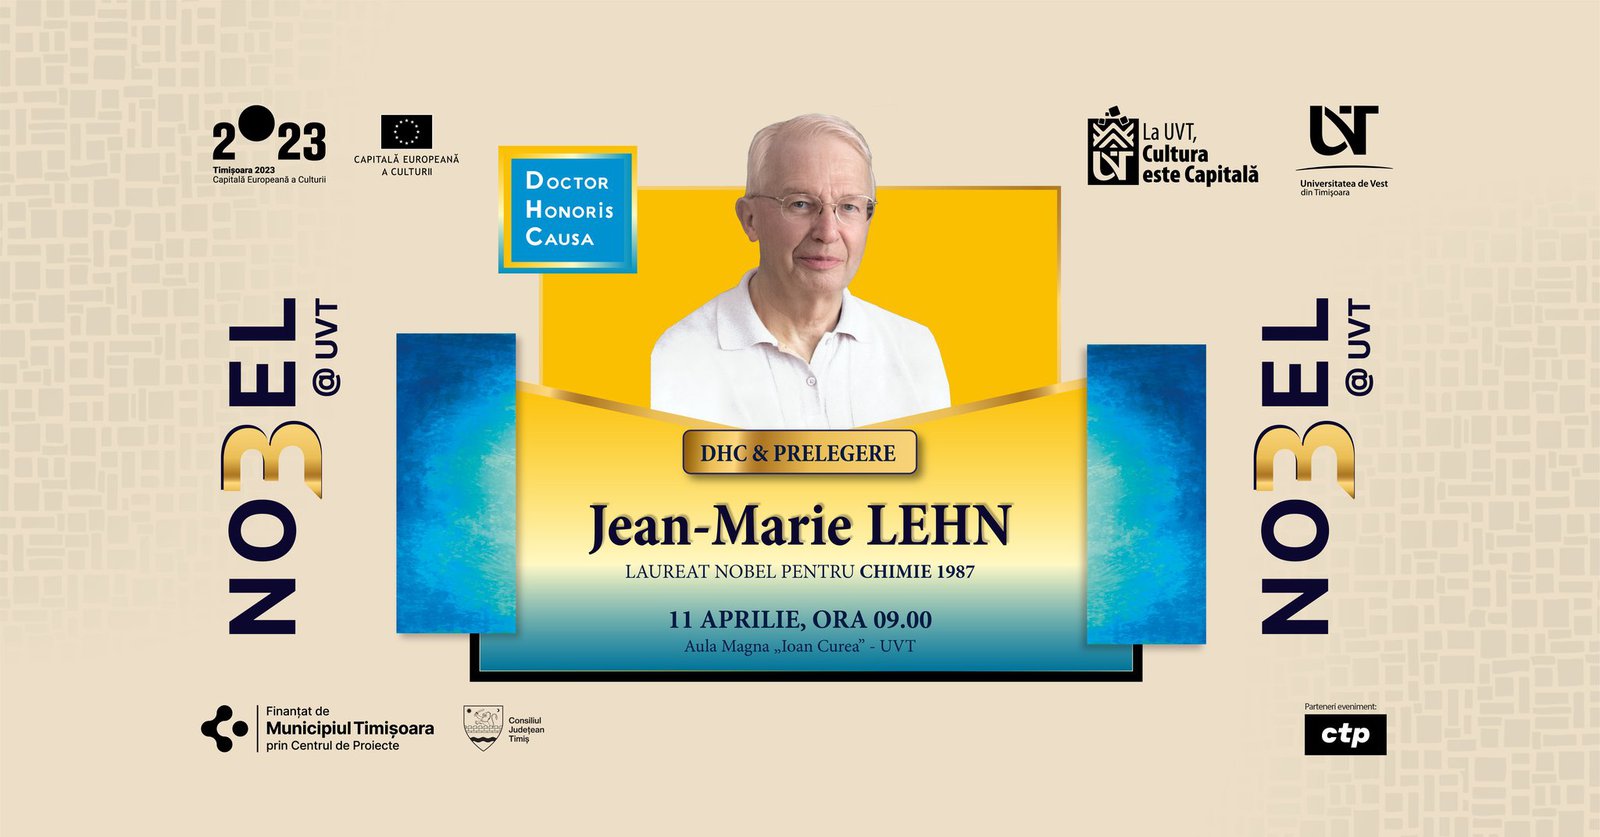 Ideas that change the world - Jean-Marie Lehn, April 11, 2023